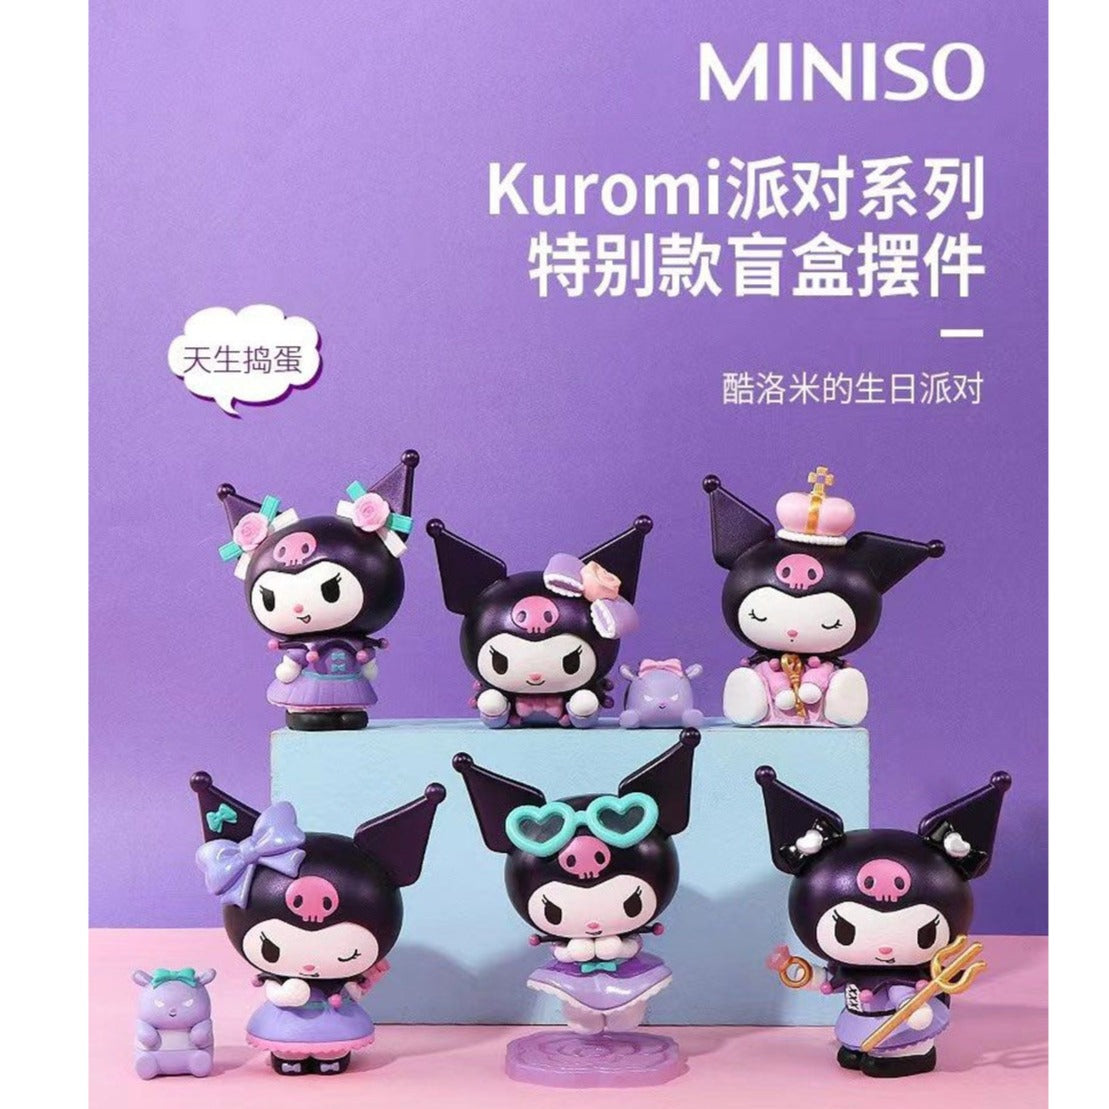 Miniso x Kuromi Party Series